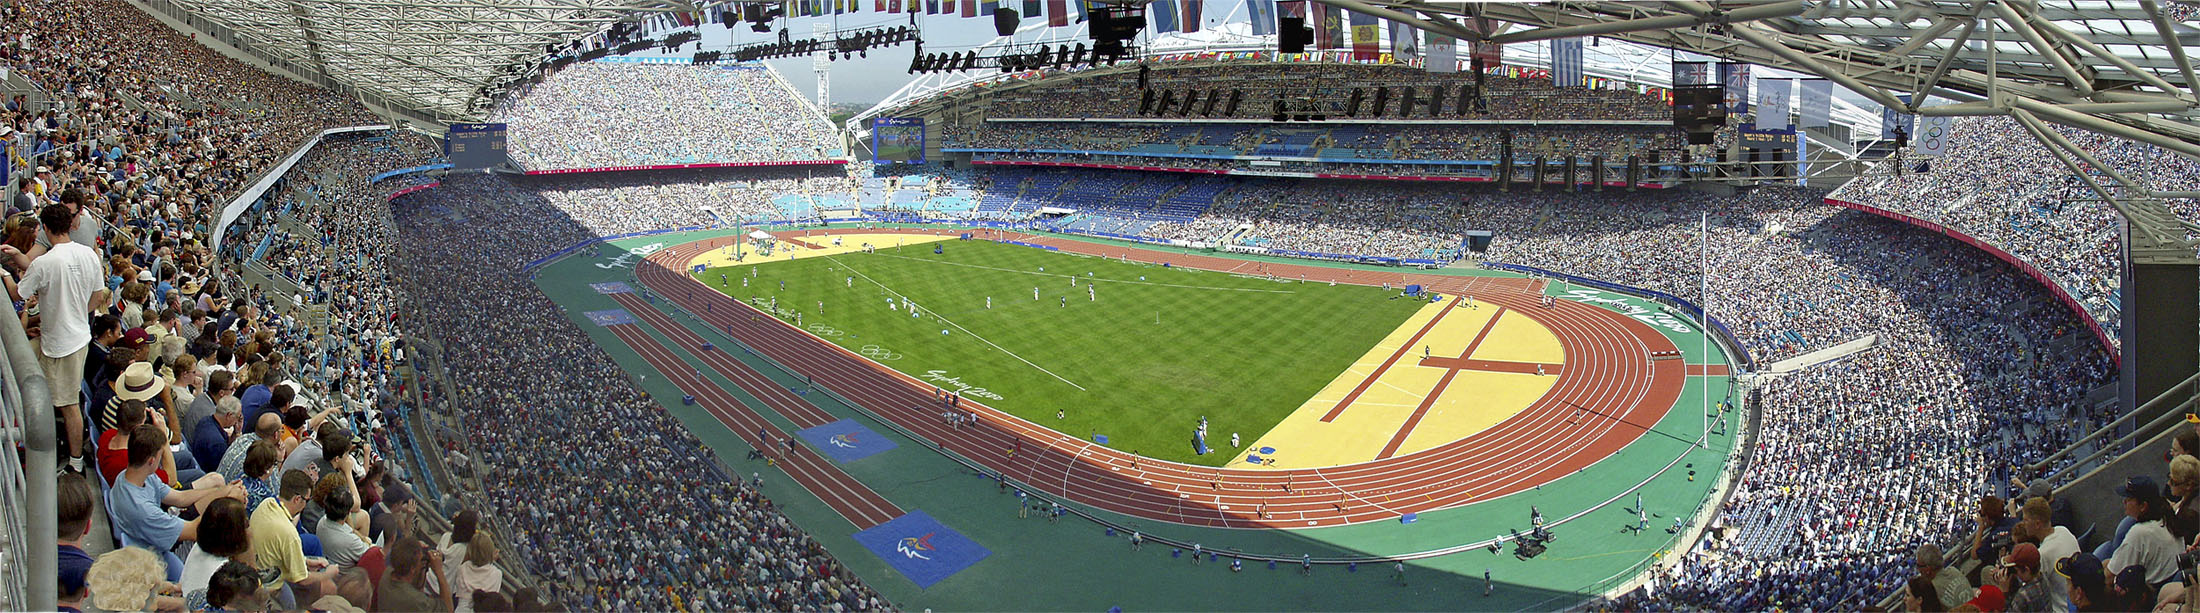 2000 Sydney Olympic Stadium Panorama